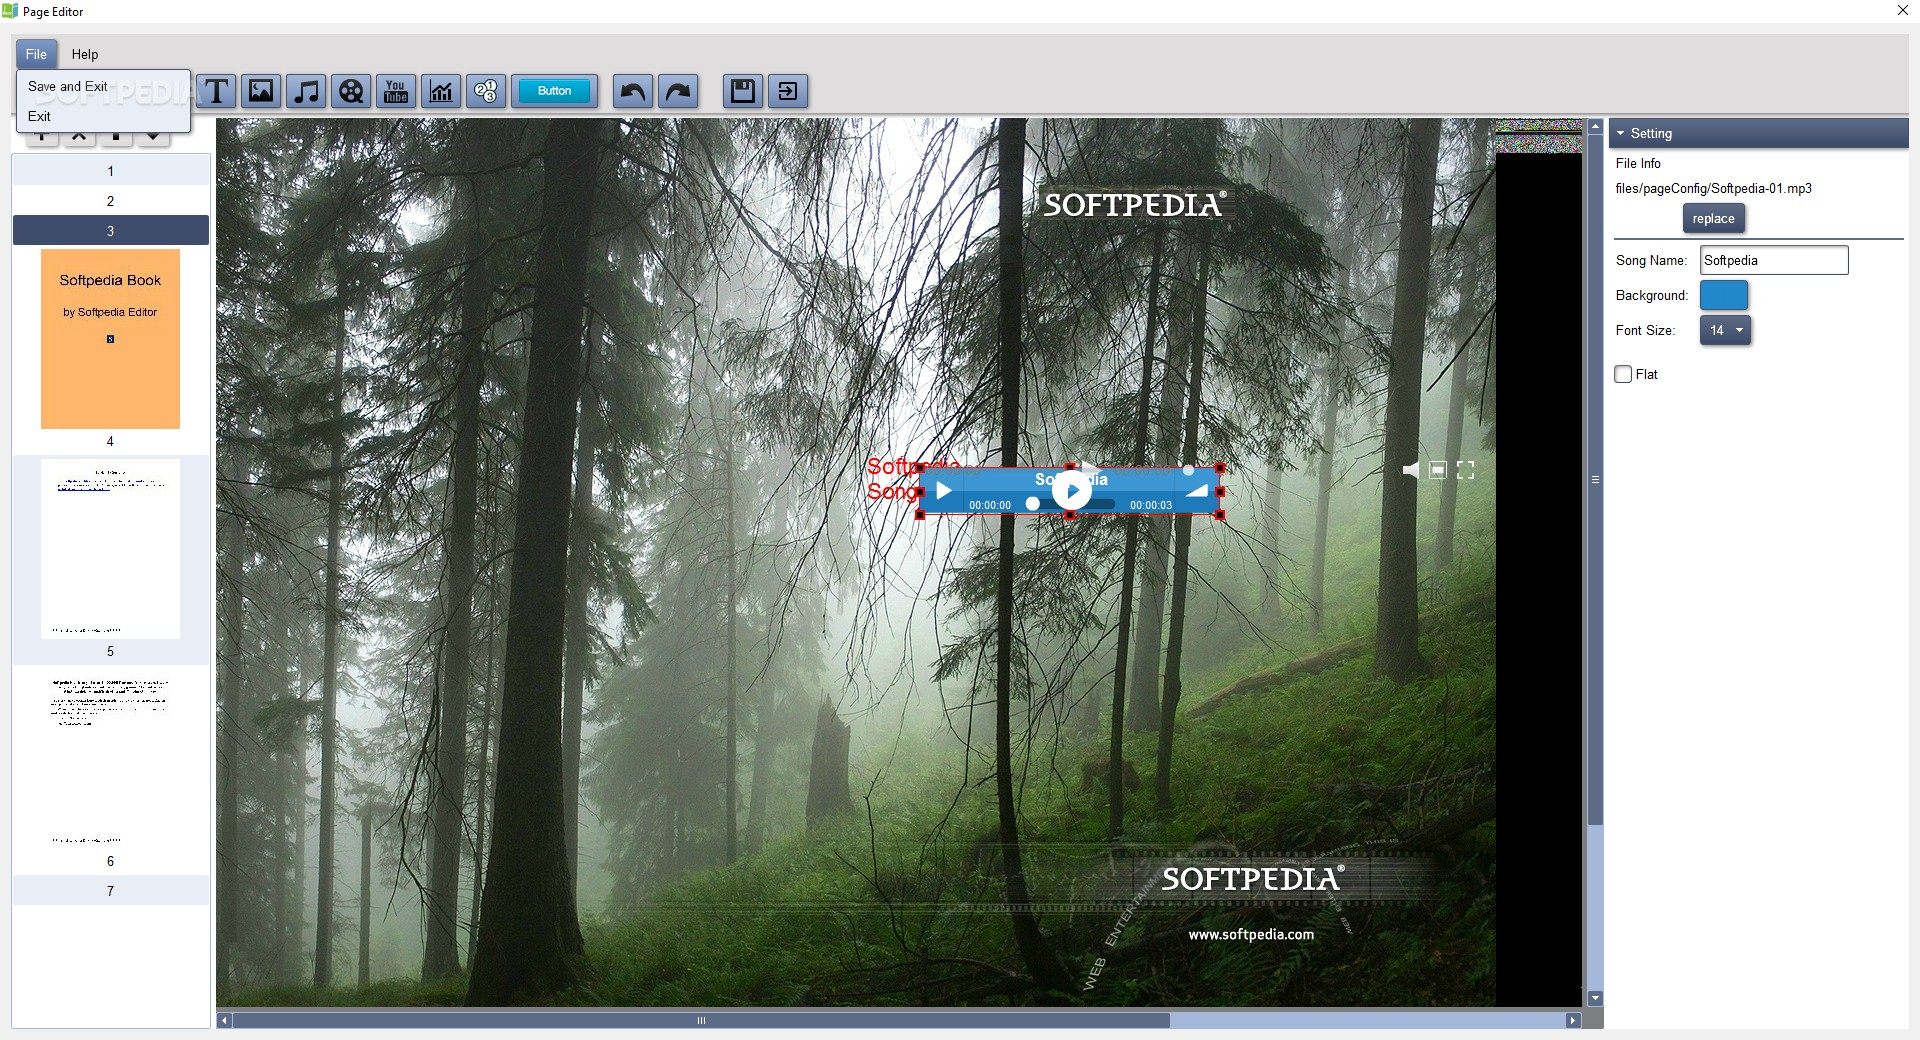 1stFlip FlipBook Creator Pro 2.7.32 for windows instal free